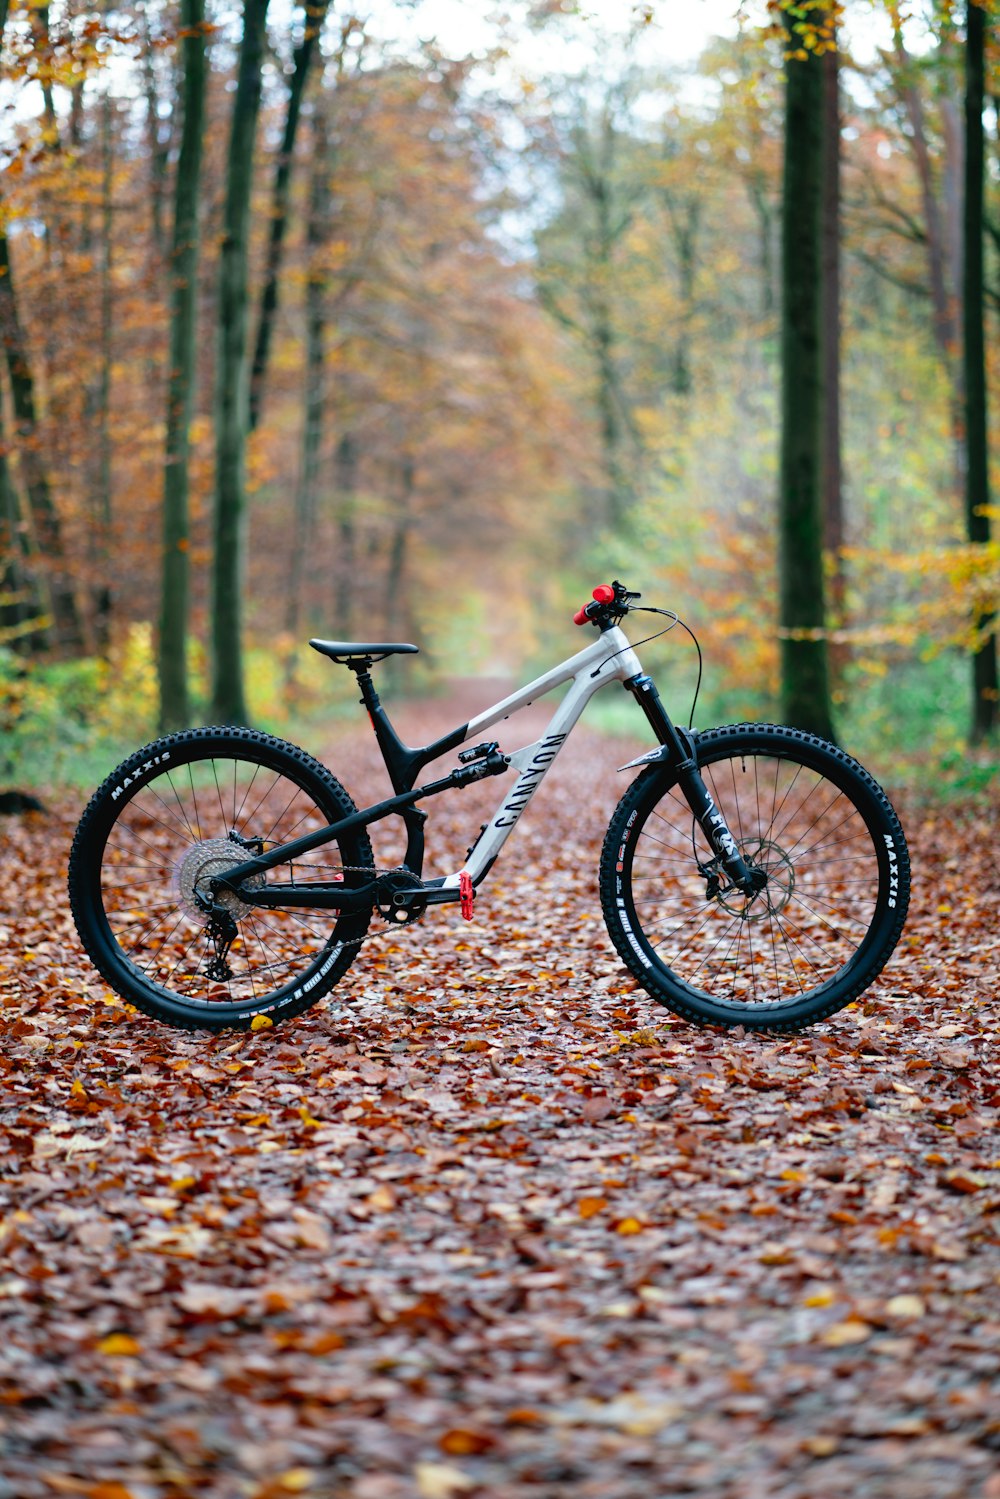 una bicicleta estacionada en una zona boscosa